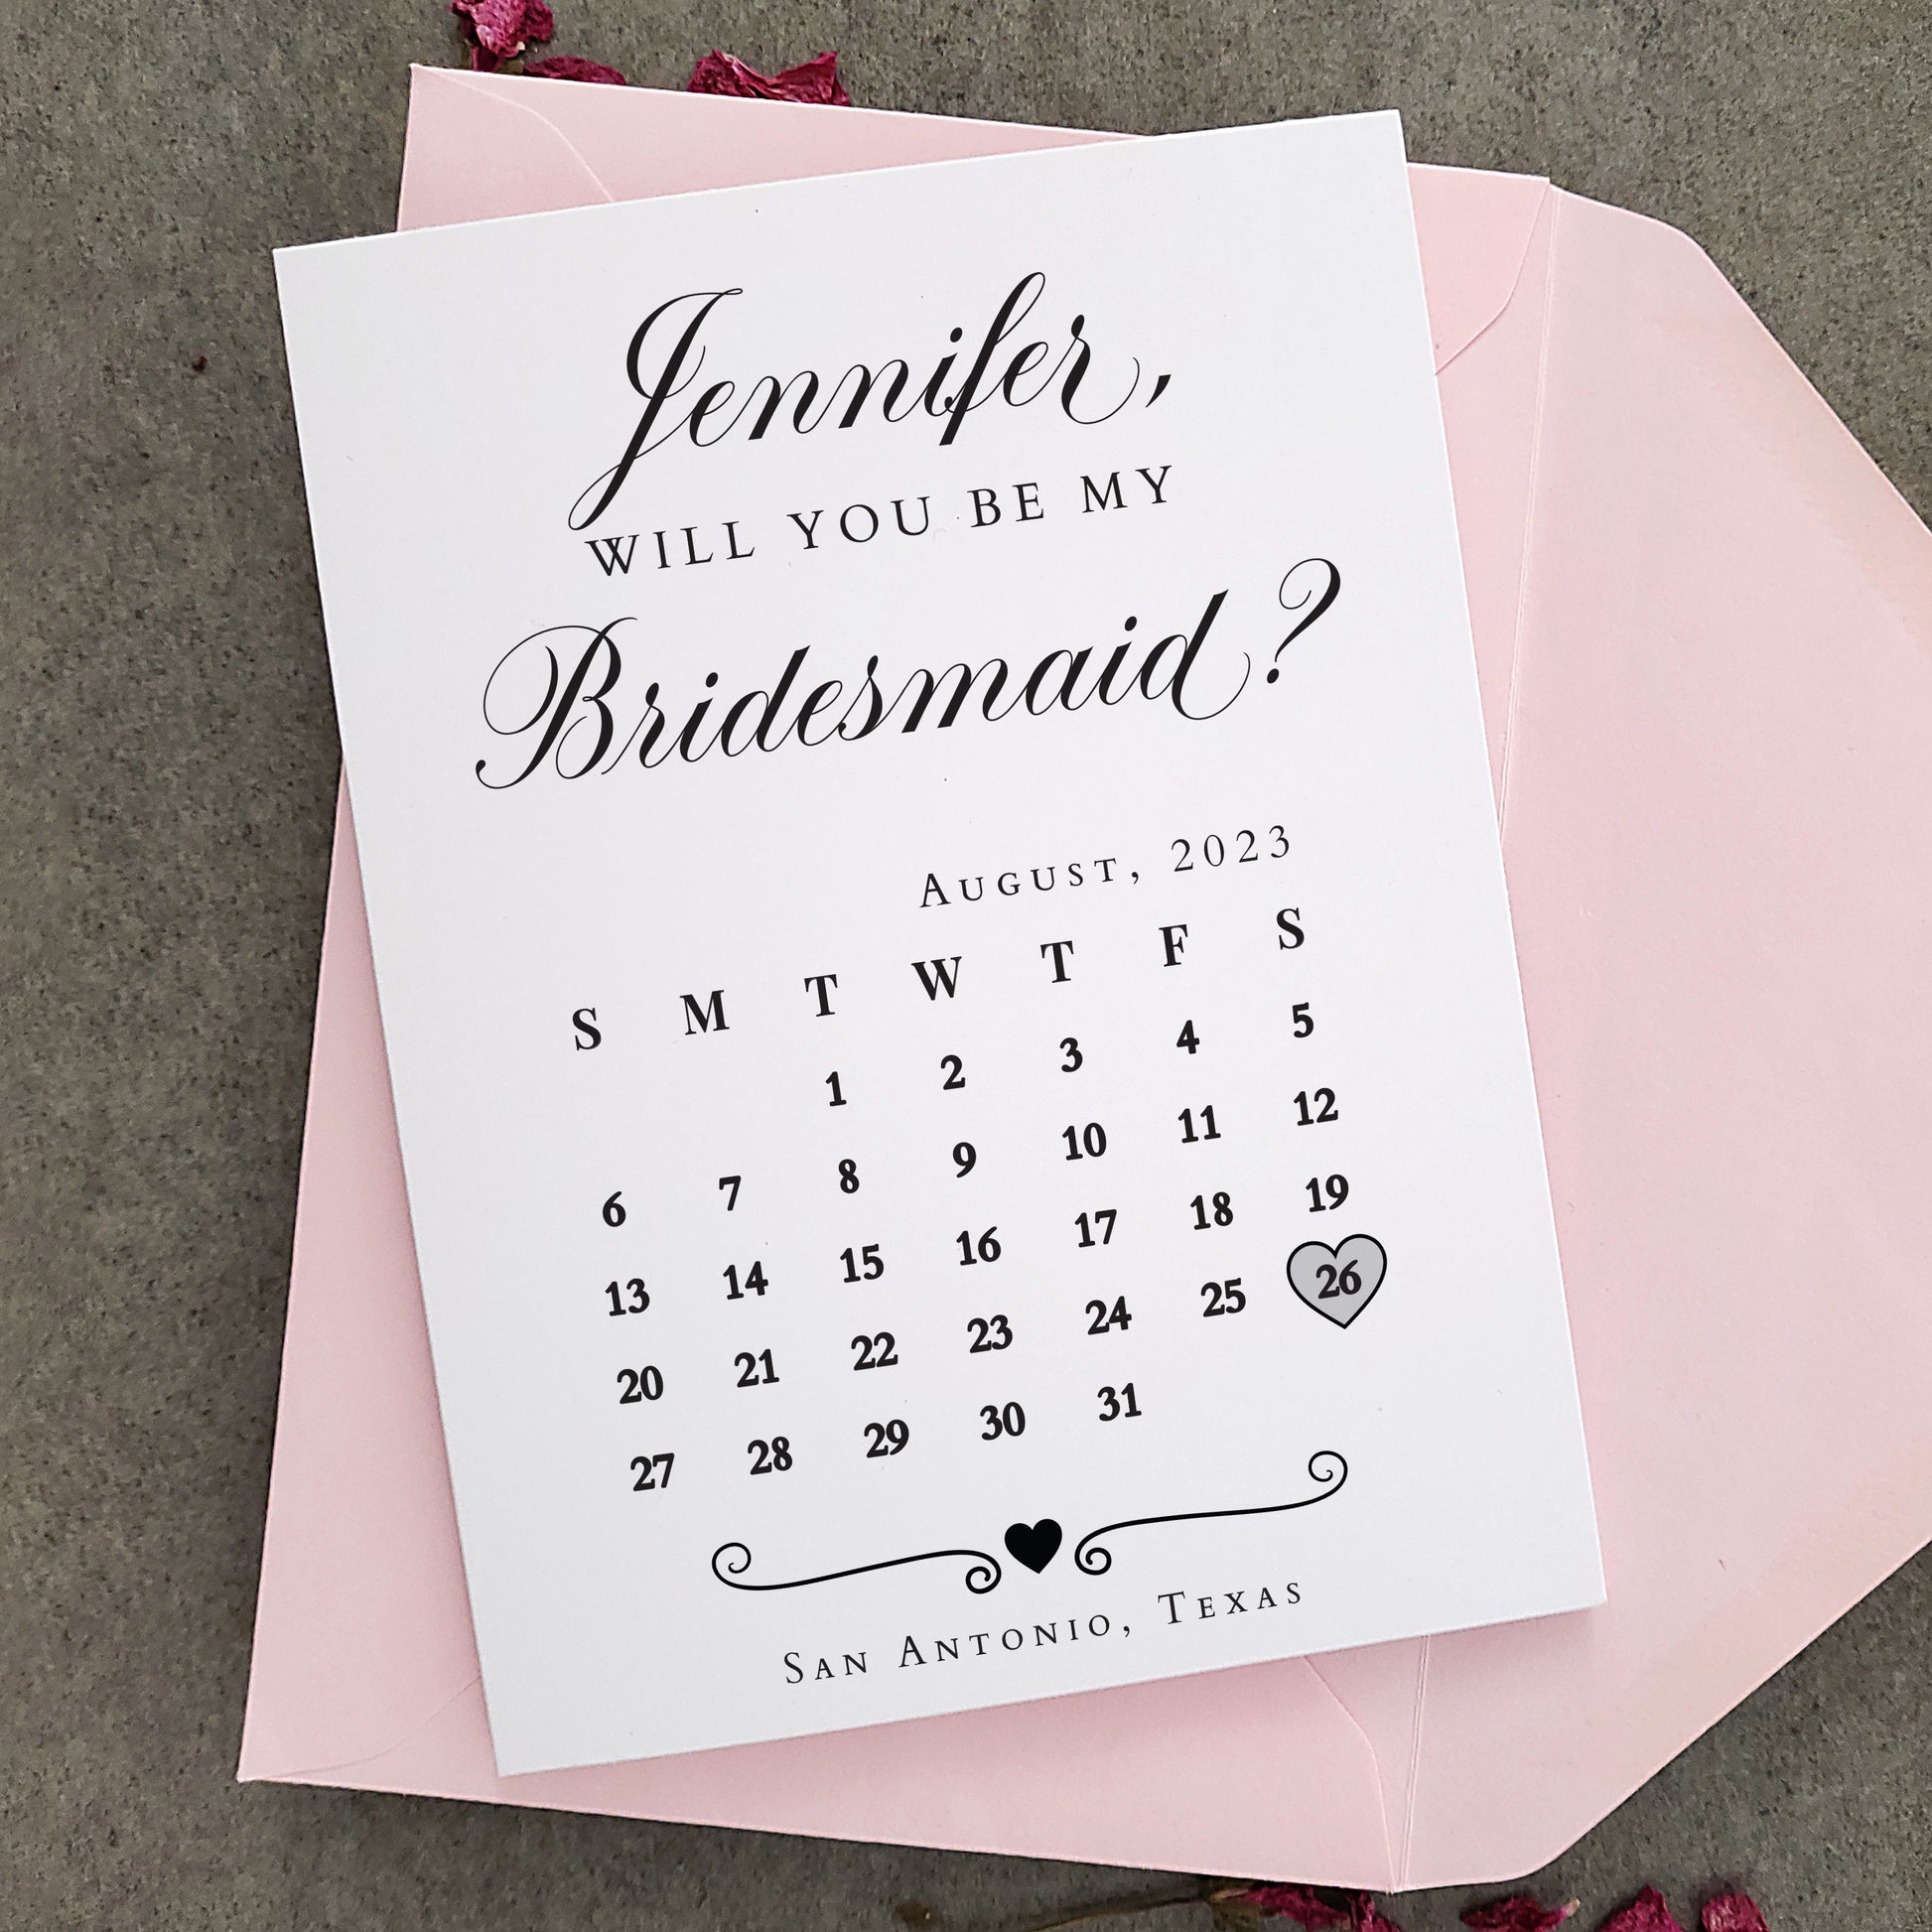 elegant will you be my bridesmaid proposal card with calendar design - XOXOKristen